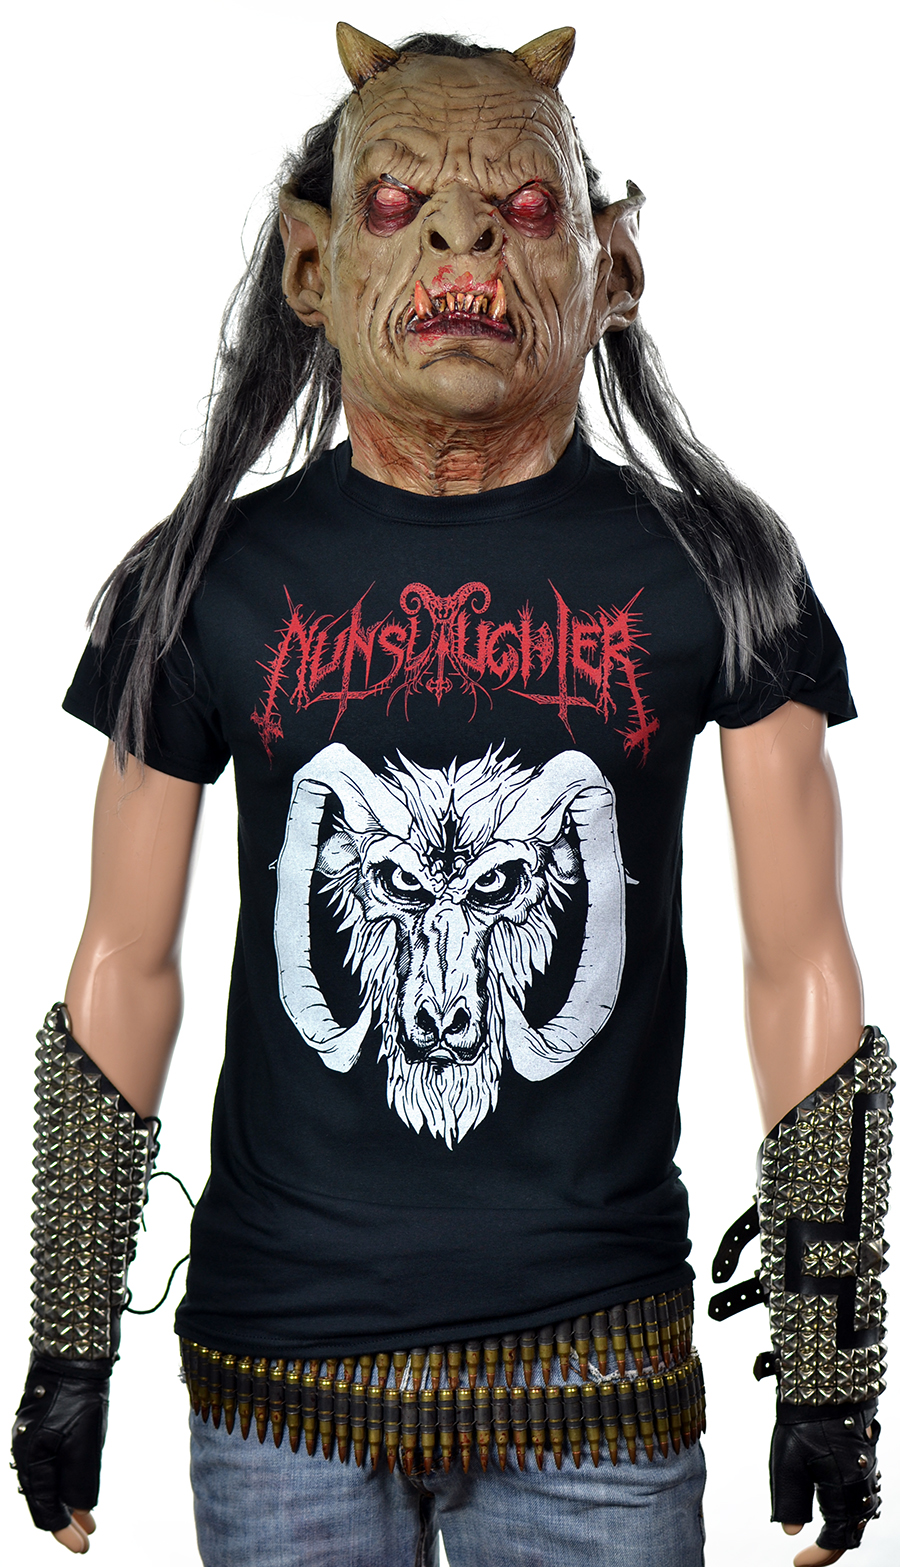 NUNSLAUGHTER - Satan Is Metal's Master